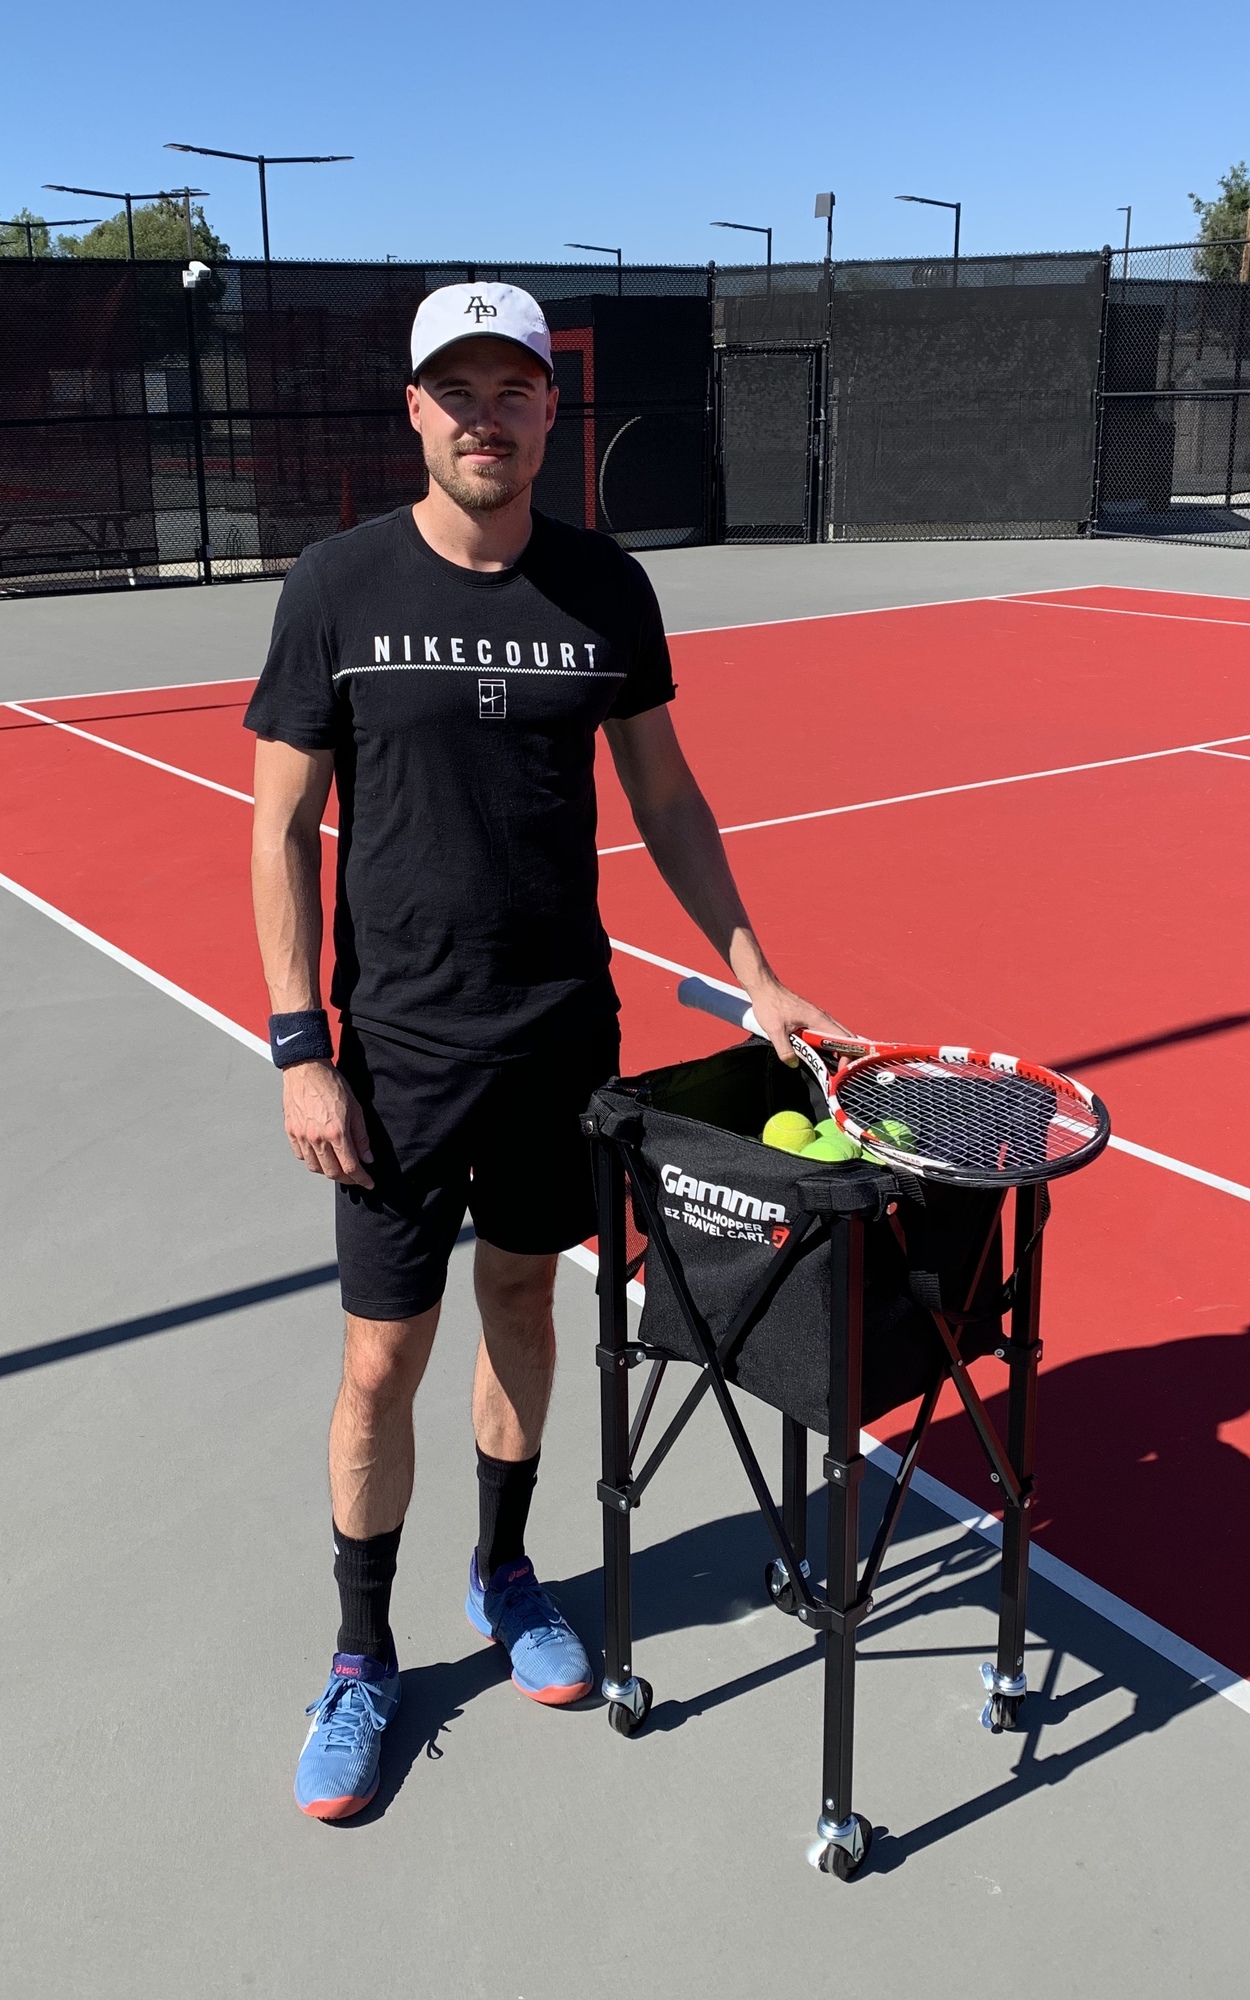 Frederik W. teaches tennis lessons in La Mirada, CA